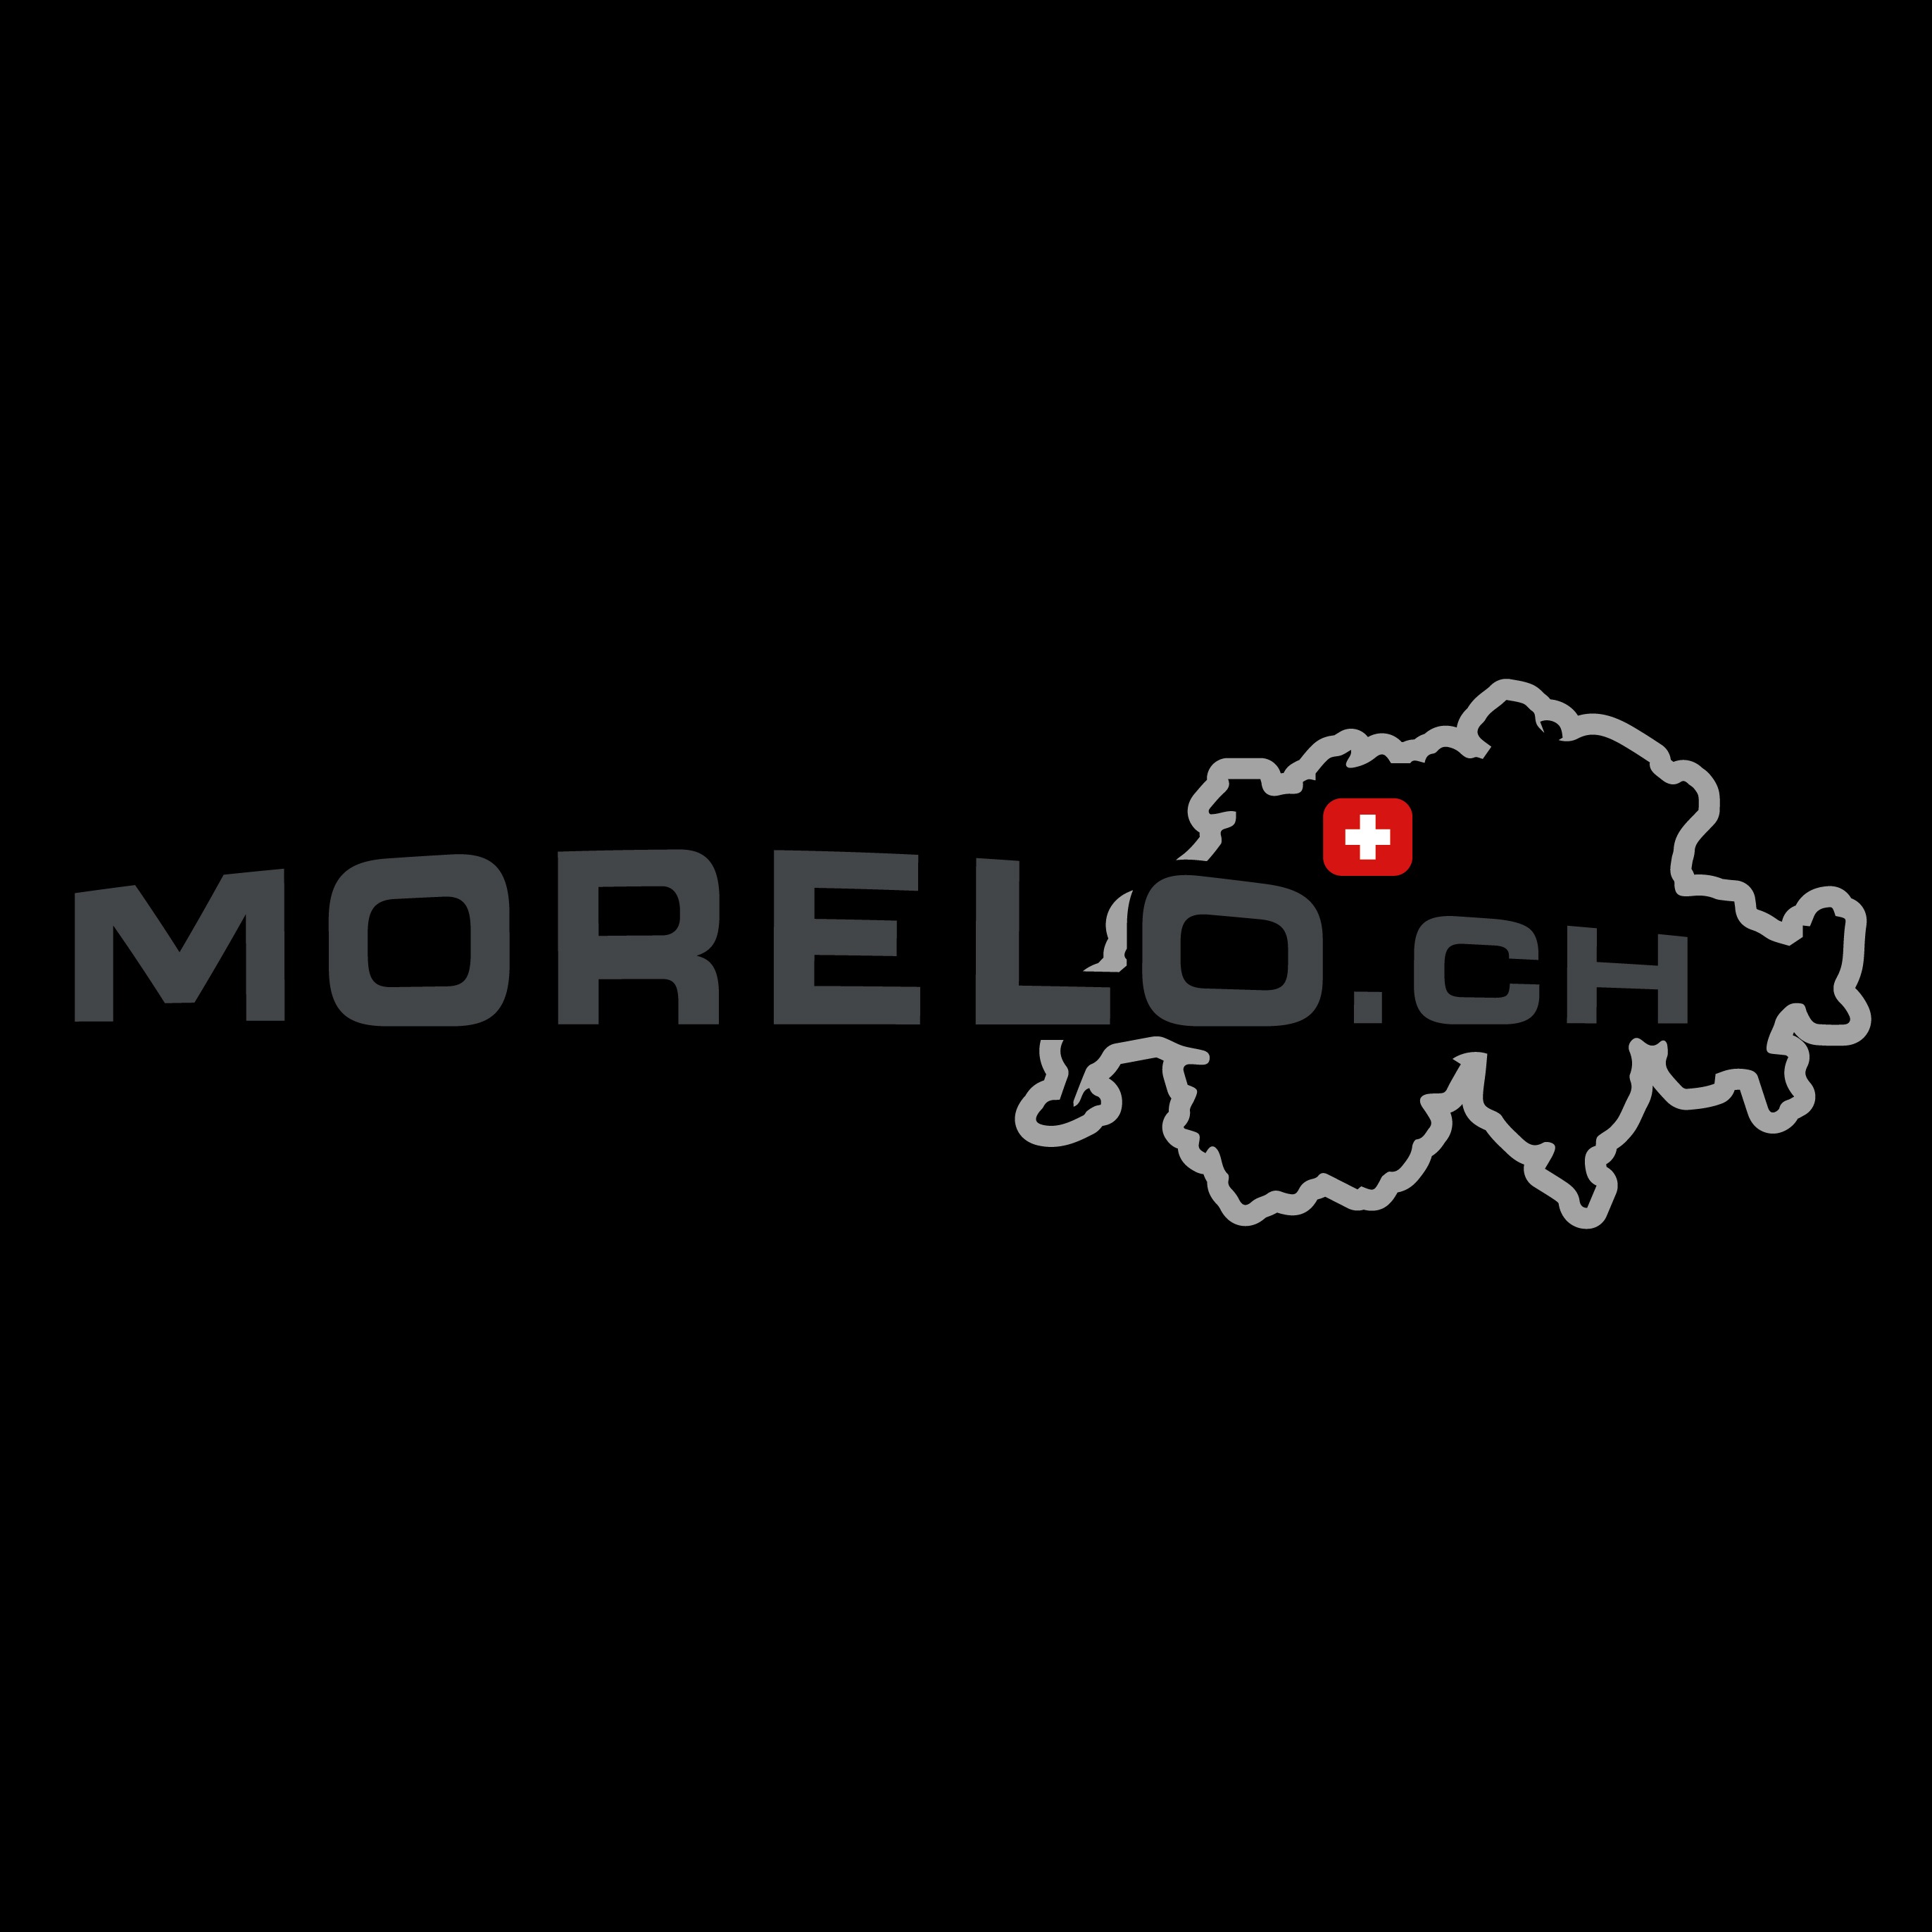 morelo.ch Logo